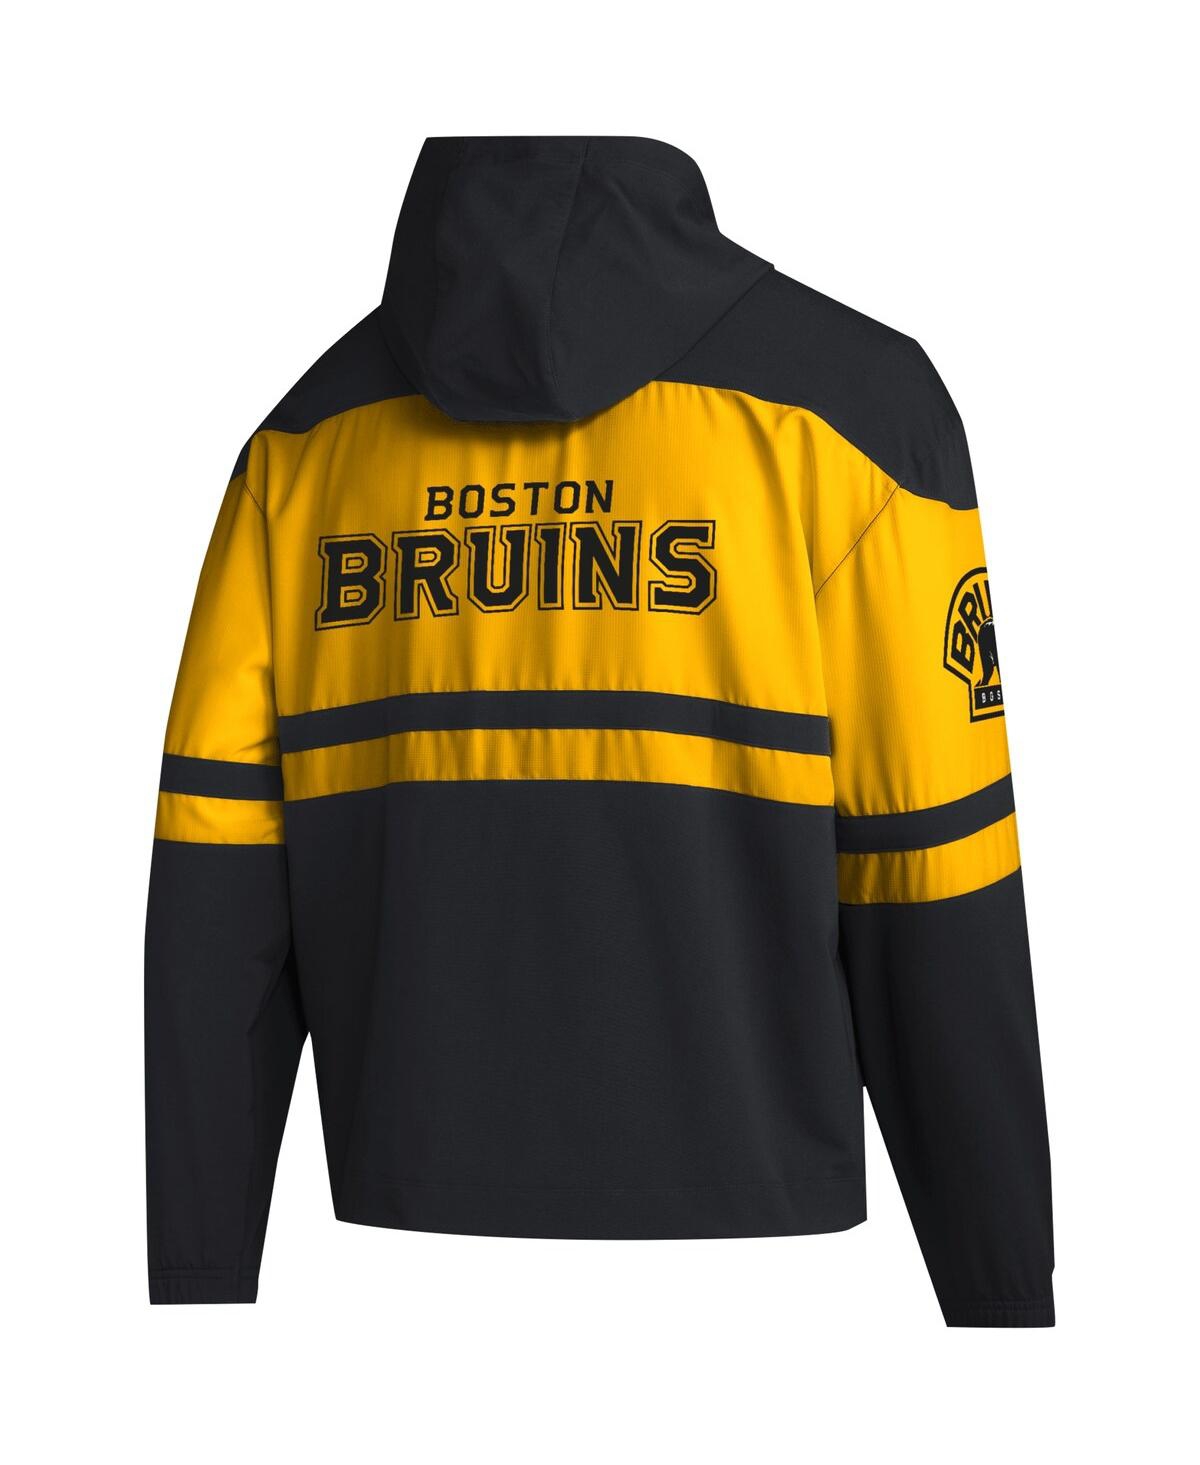 Shop Adidas Originals Men's Adidas Black Boston Bruins Full-zip Hoodie